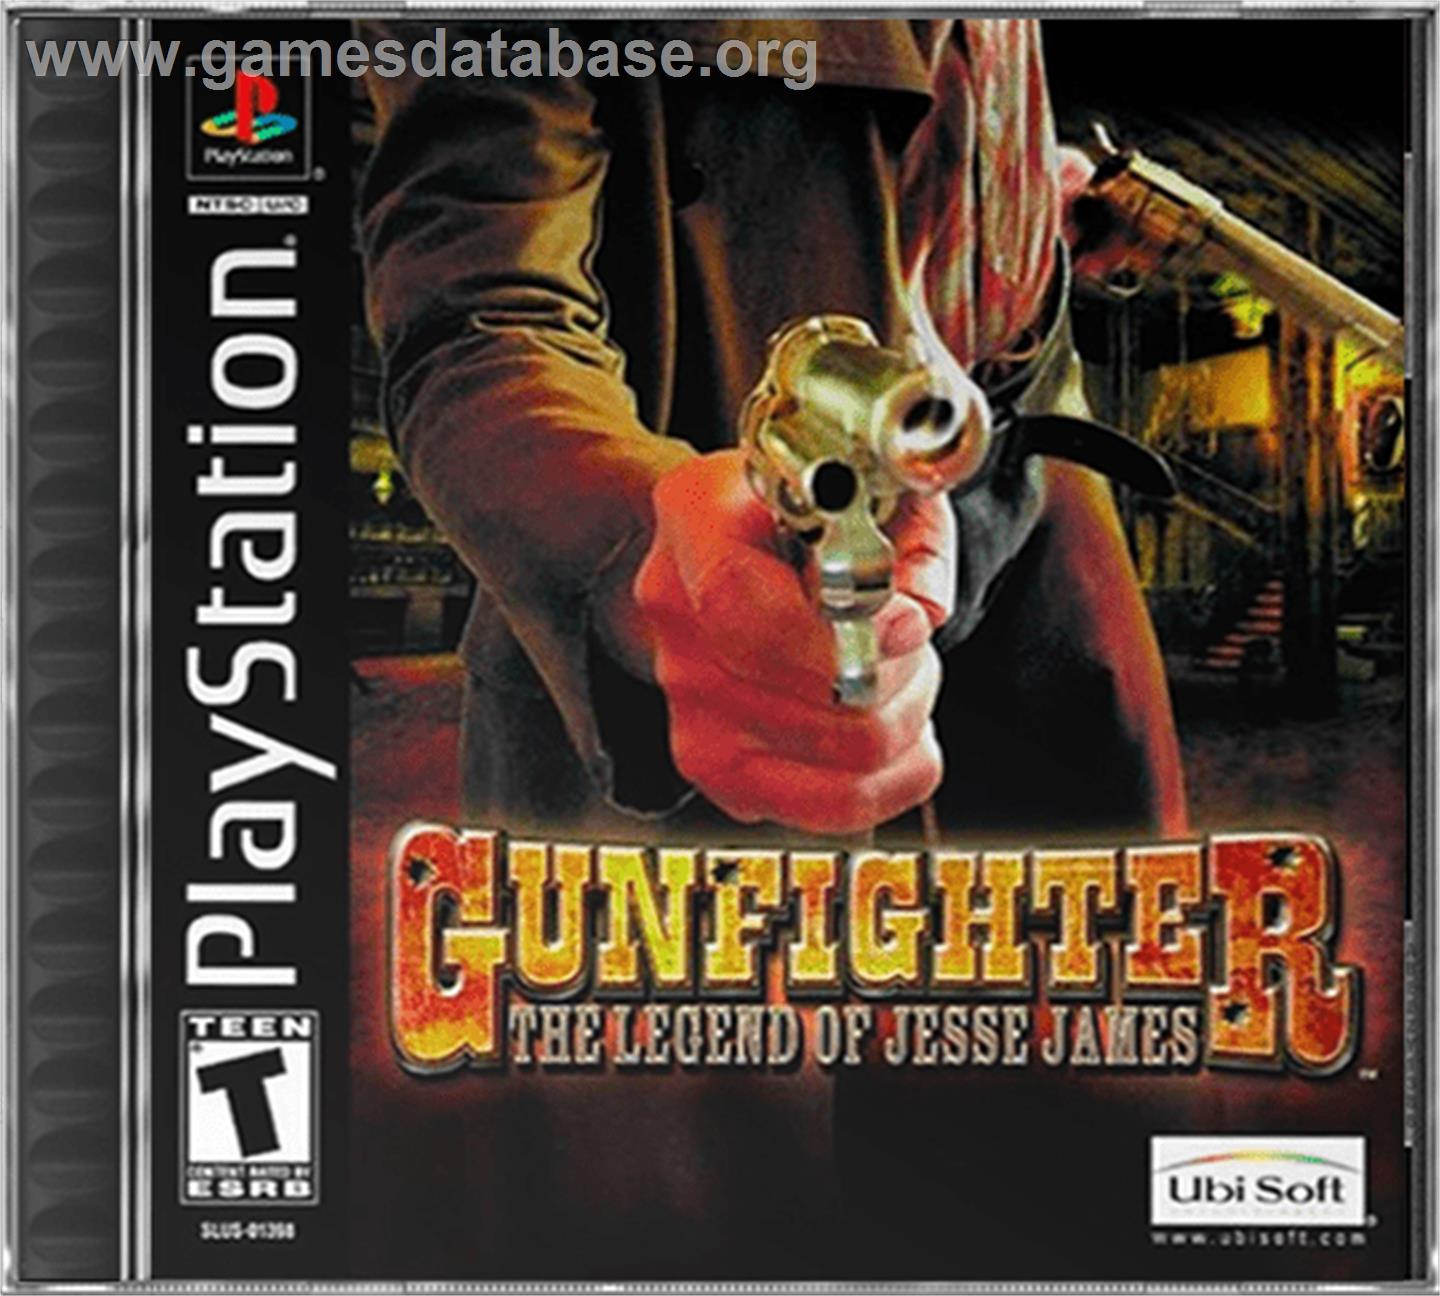 Gunfighter: The Legend of Jesse James - Sony Playstation - Artwork - Box